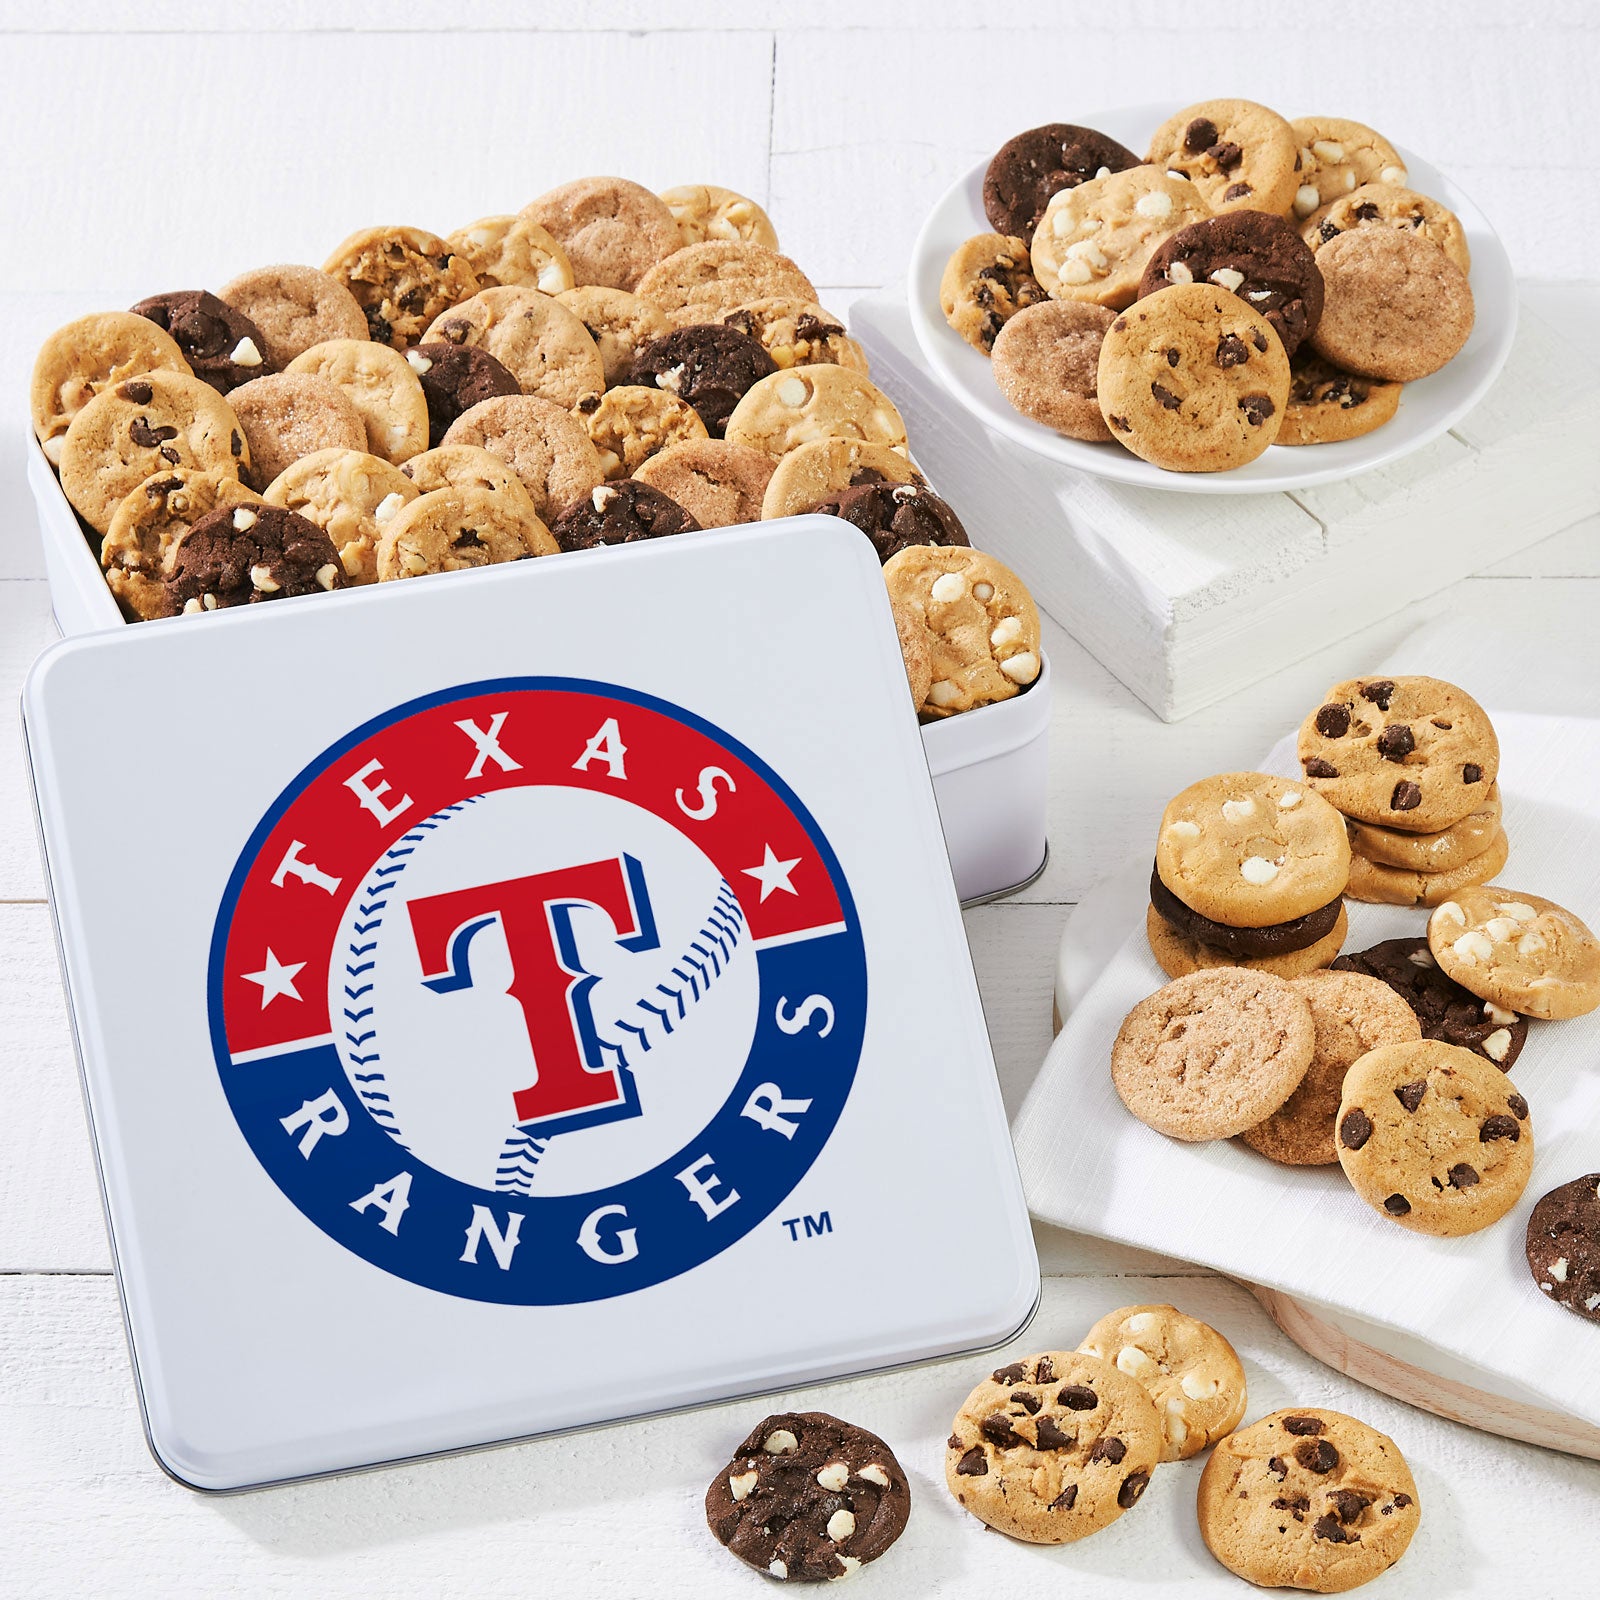  Your Fan Shop for Texas Rangers